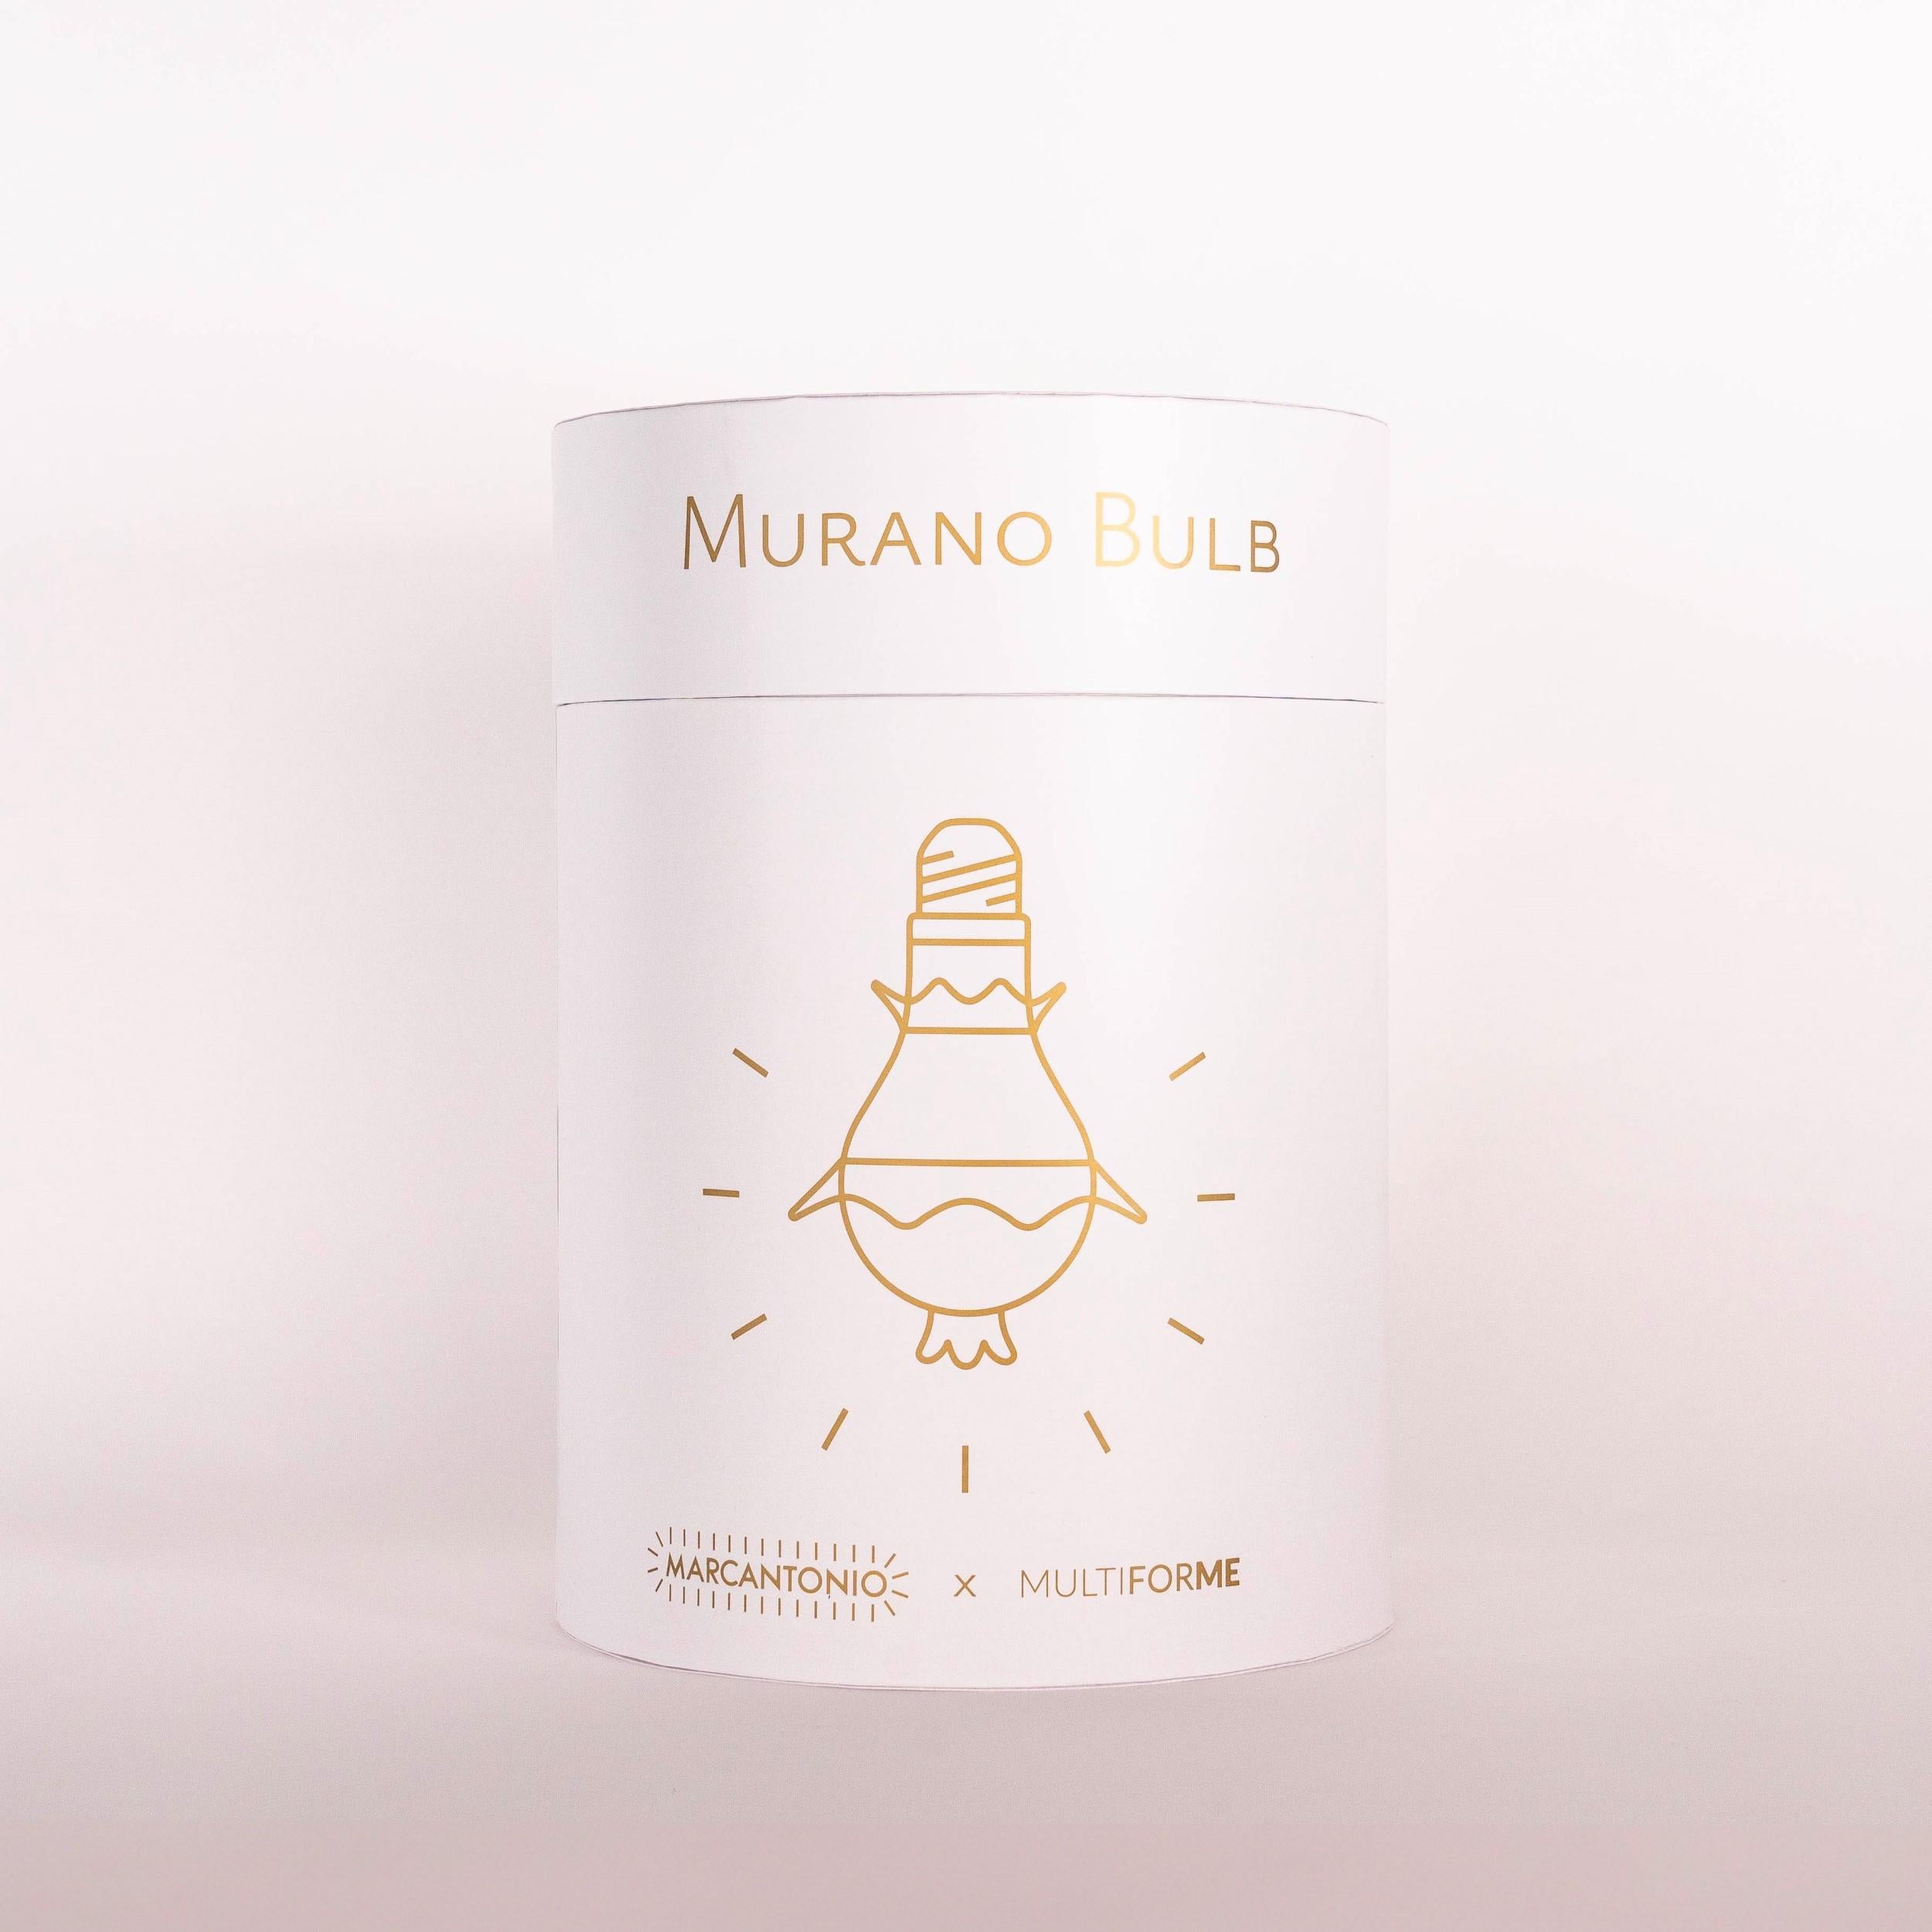 Artistic glass lightbulb chandelier Murano Bulb Marcantonio X Multiforme #07 For Sale 4